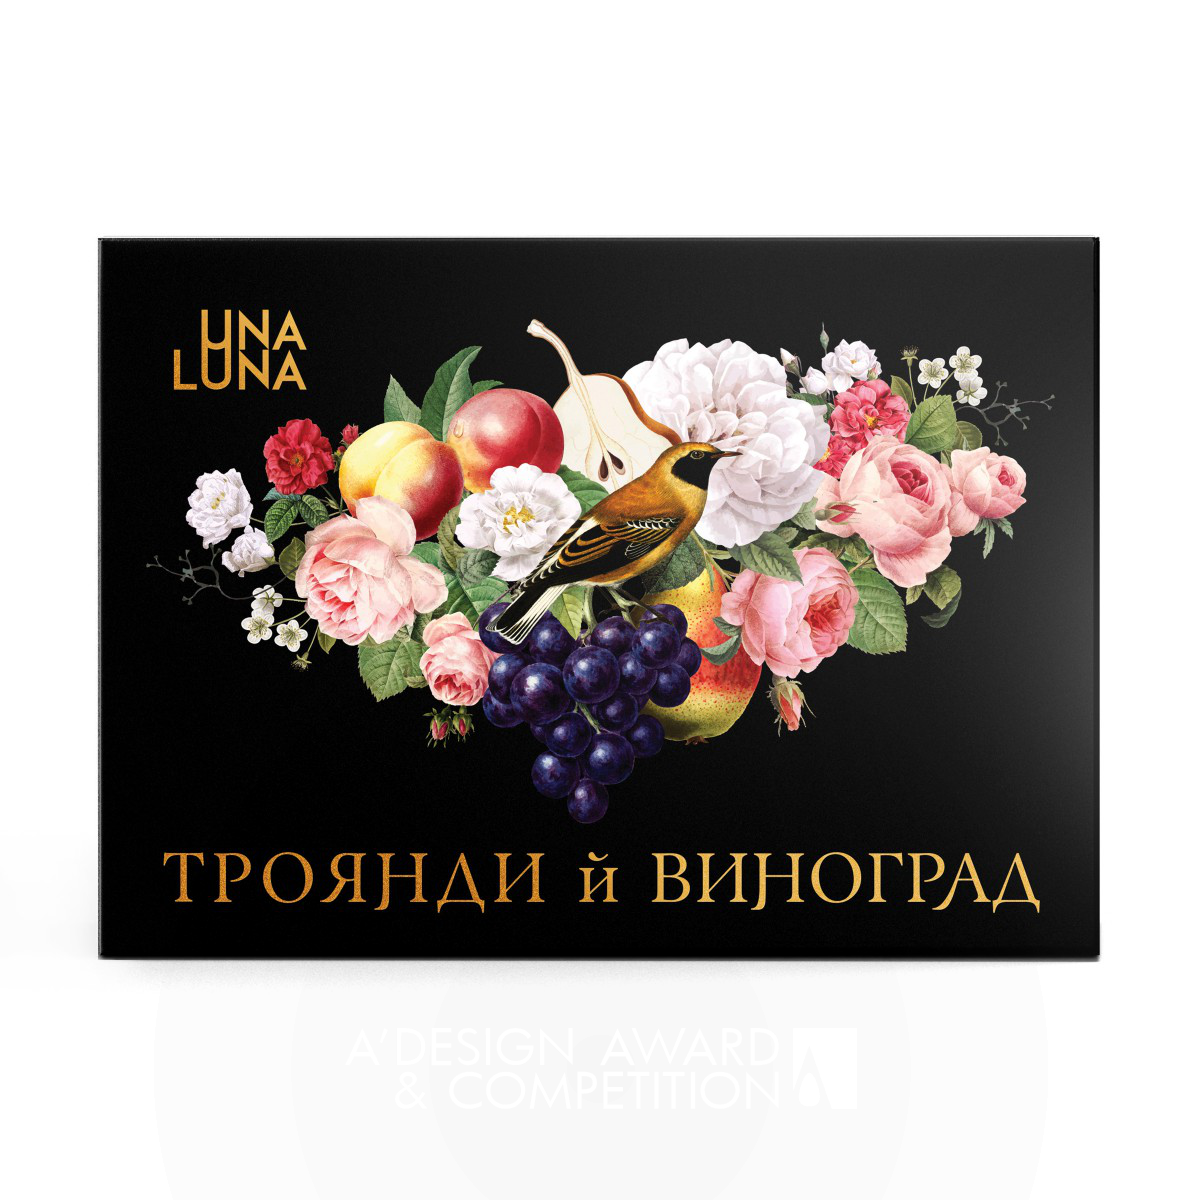 Una Luna  <b>Confectionery Packaging